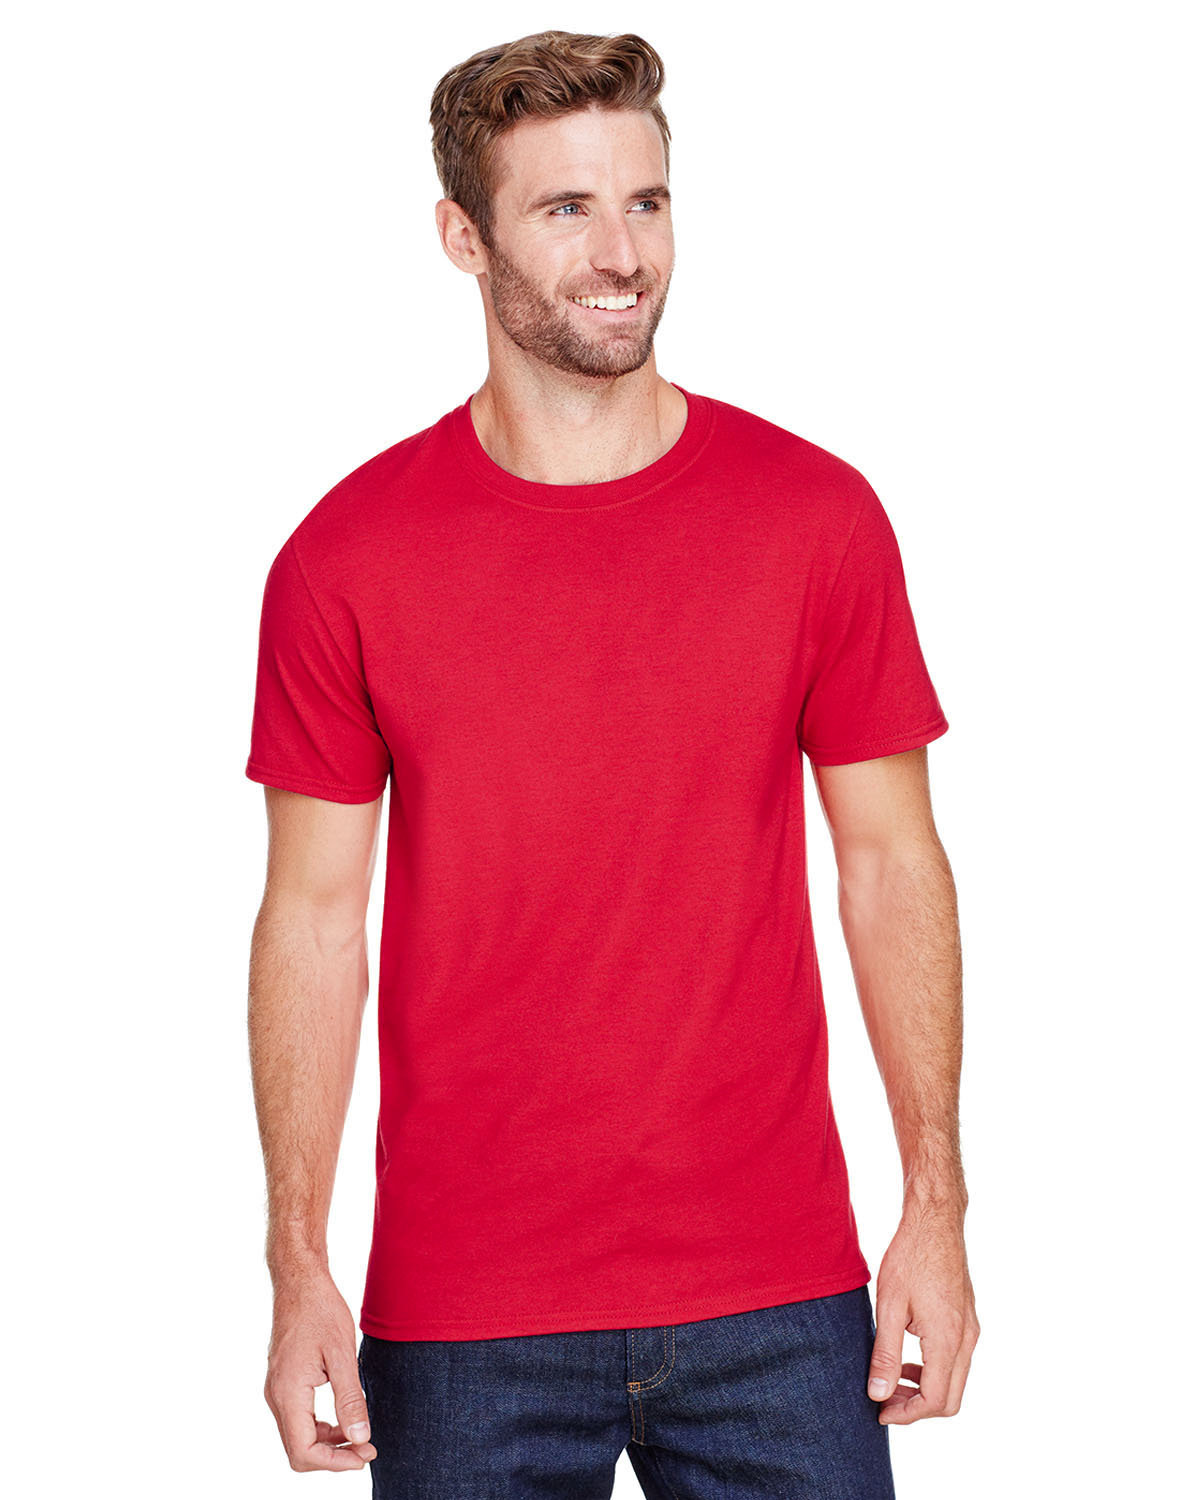 SPUN Shirts & T-Shirts JACQUARD RIB MEN'S T Shirt